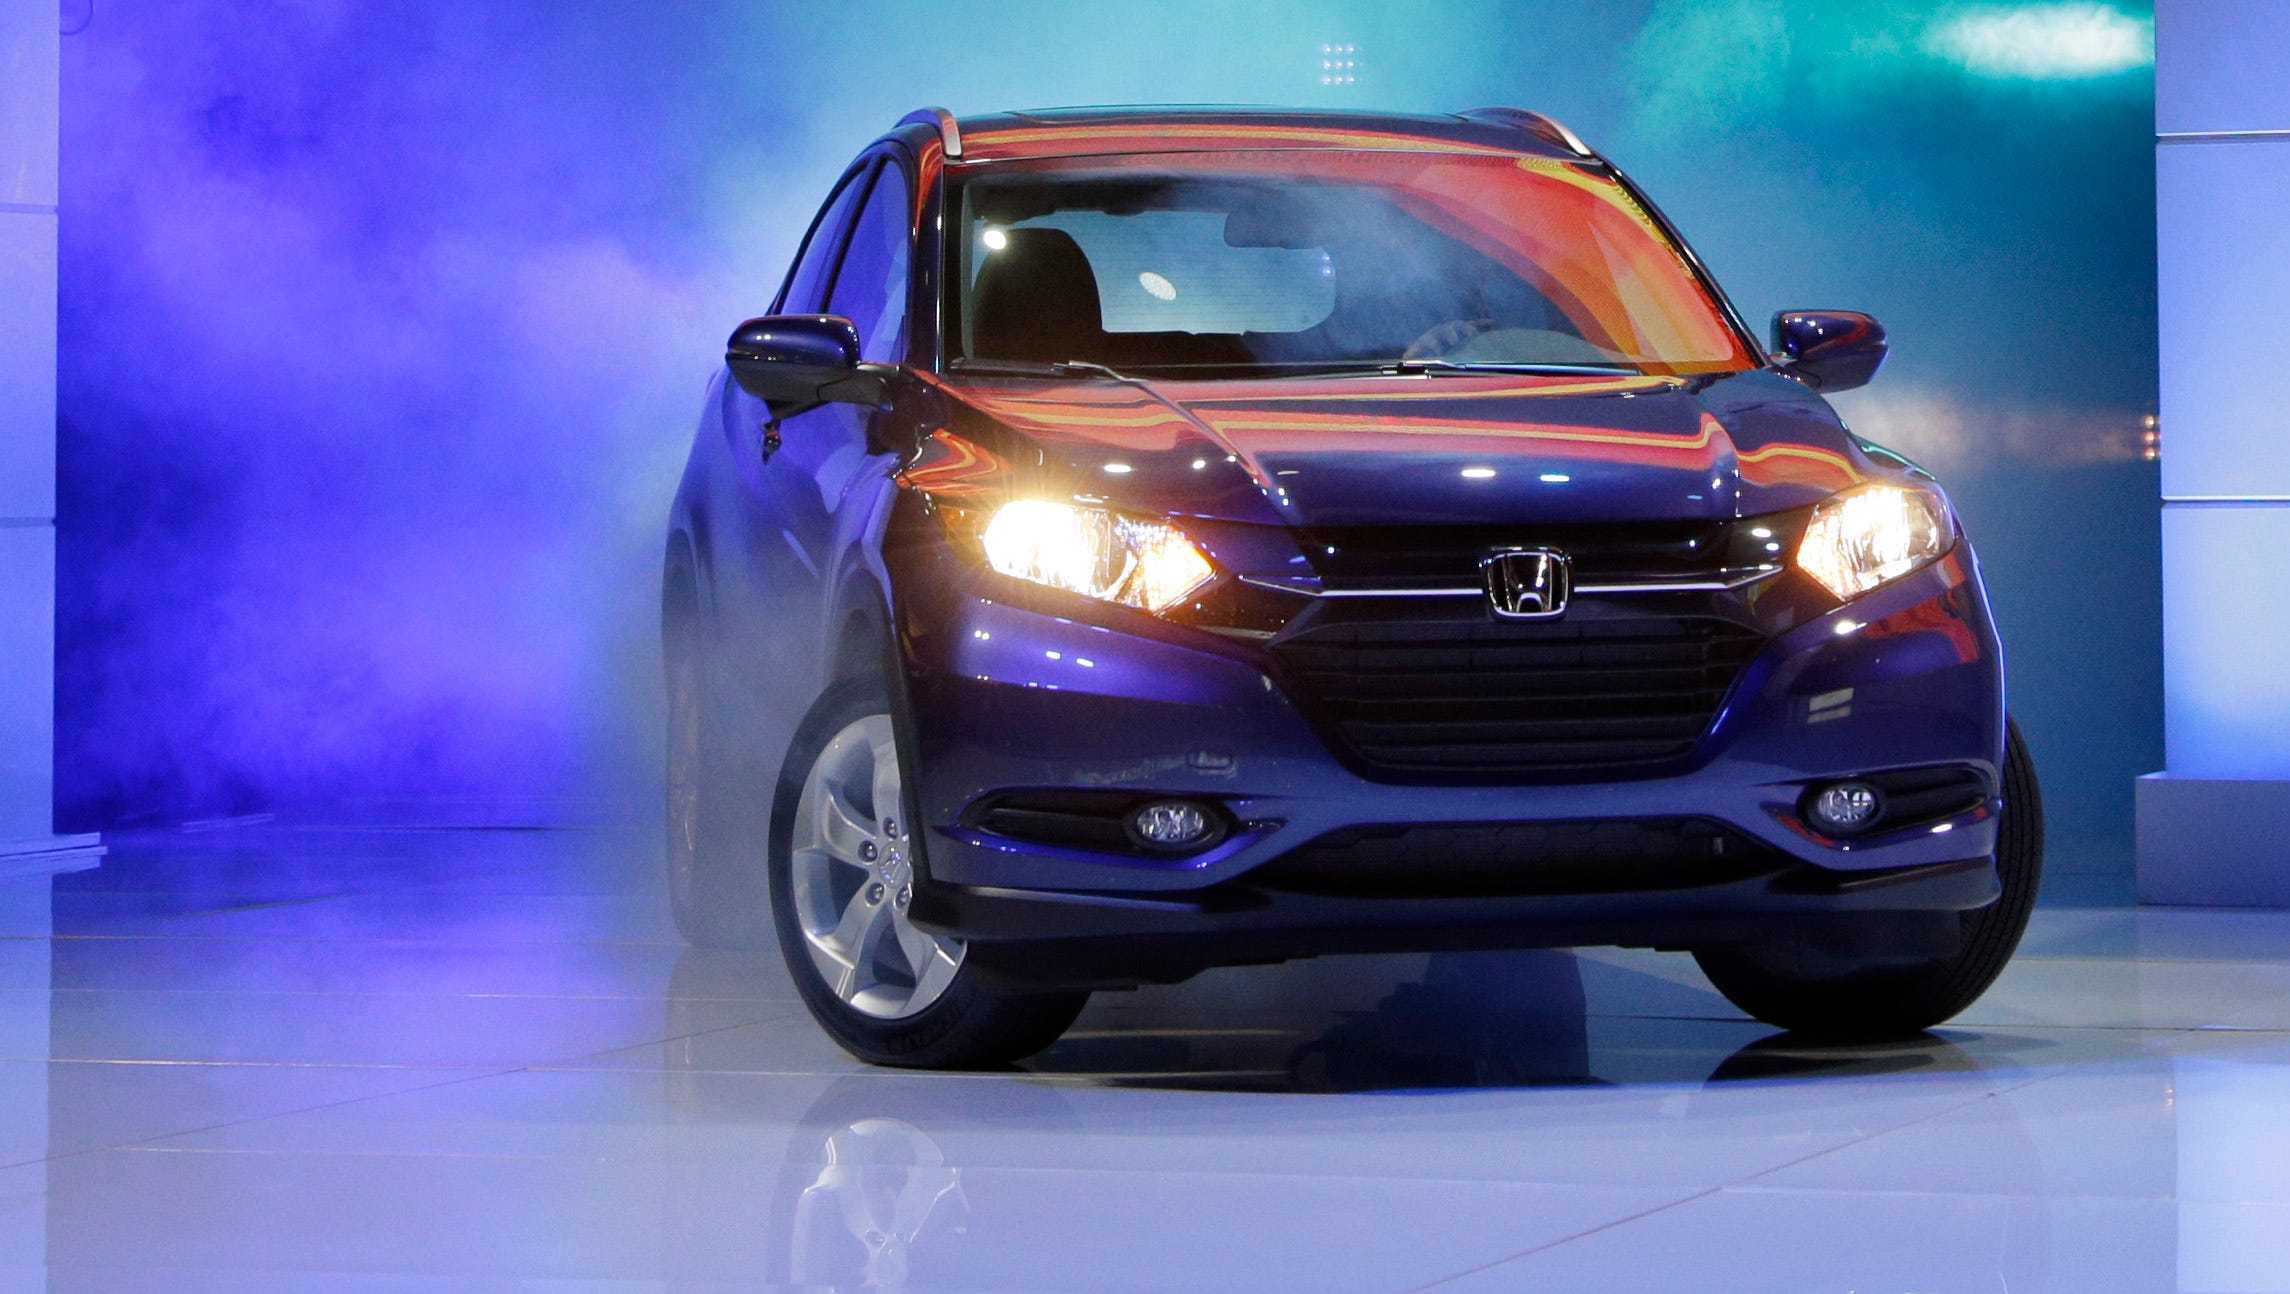 Honda prices new HR-V small SUV below $20000